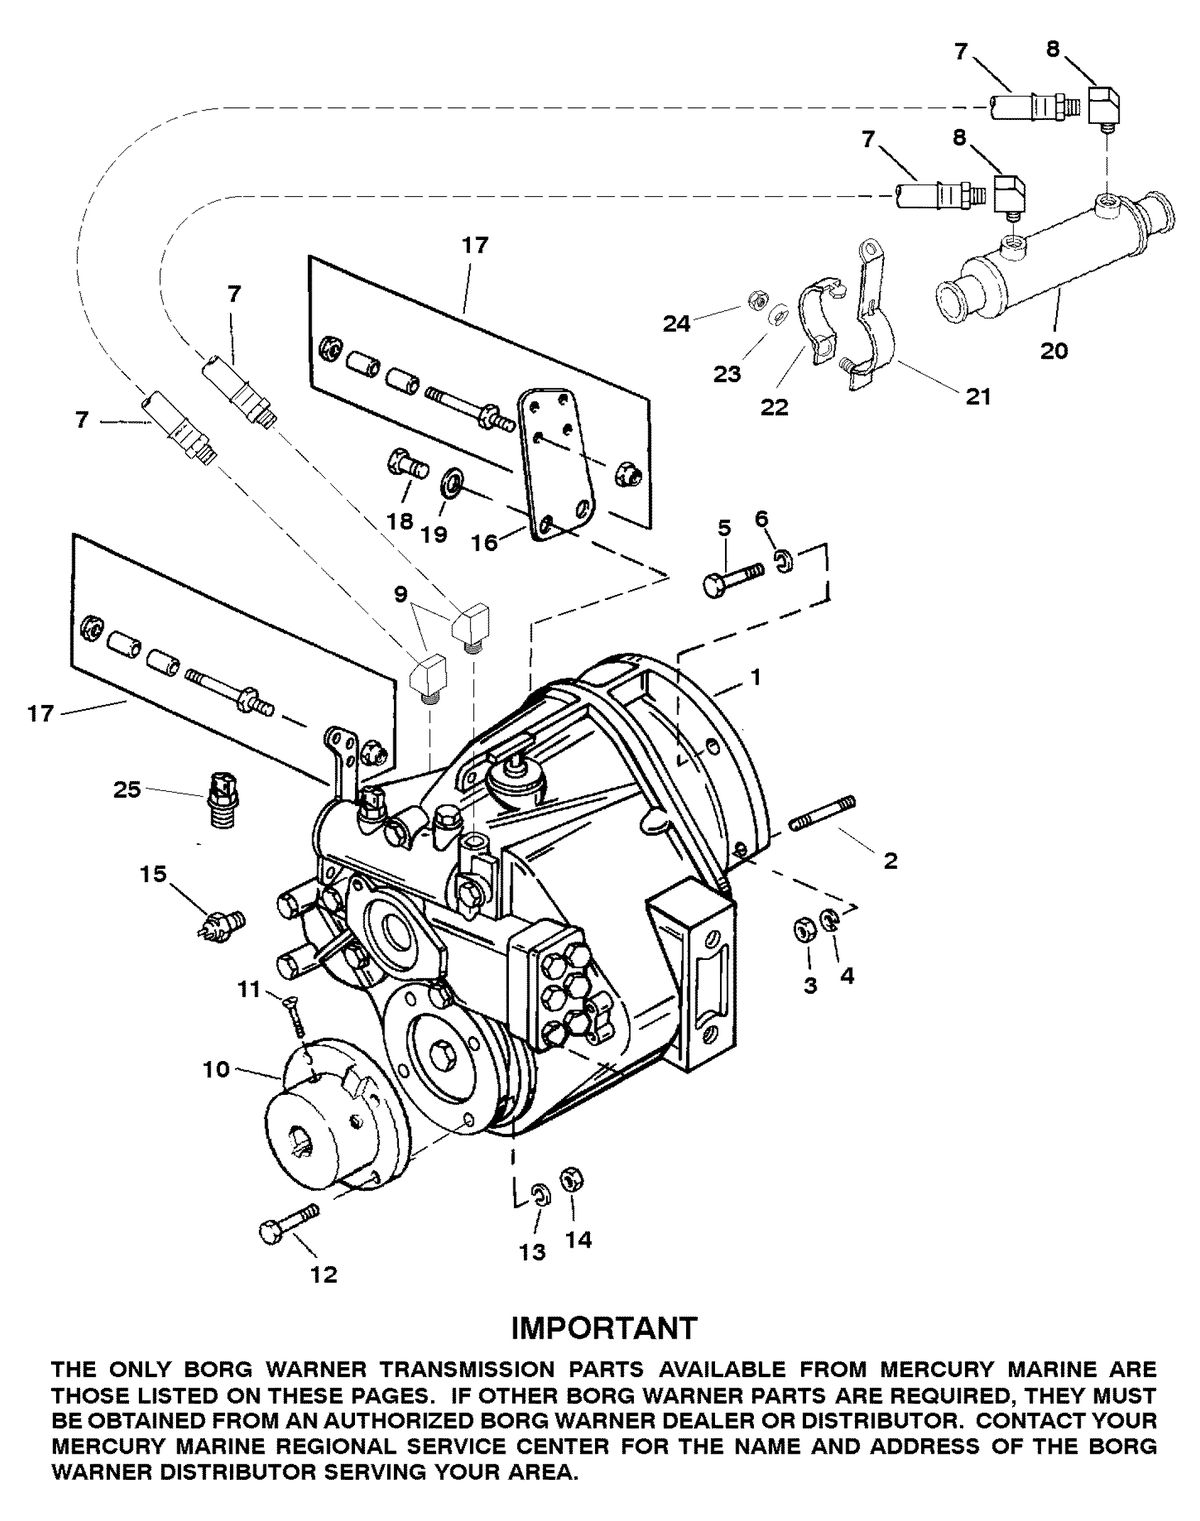 MERCRUISER 5.7L INBOARD ENGINE TRANSMISSION AND RELATED PARTS (BORG WARNER 5000)